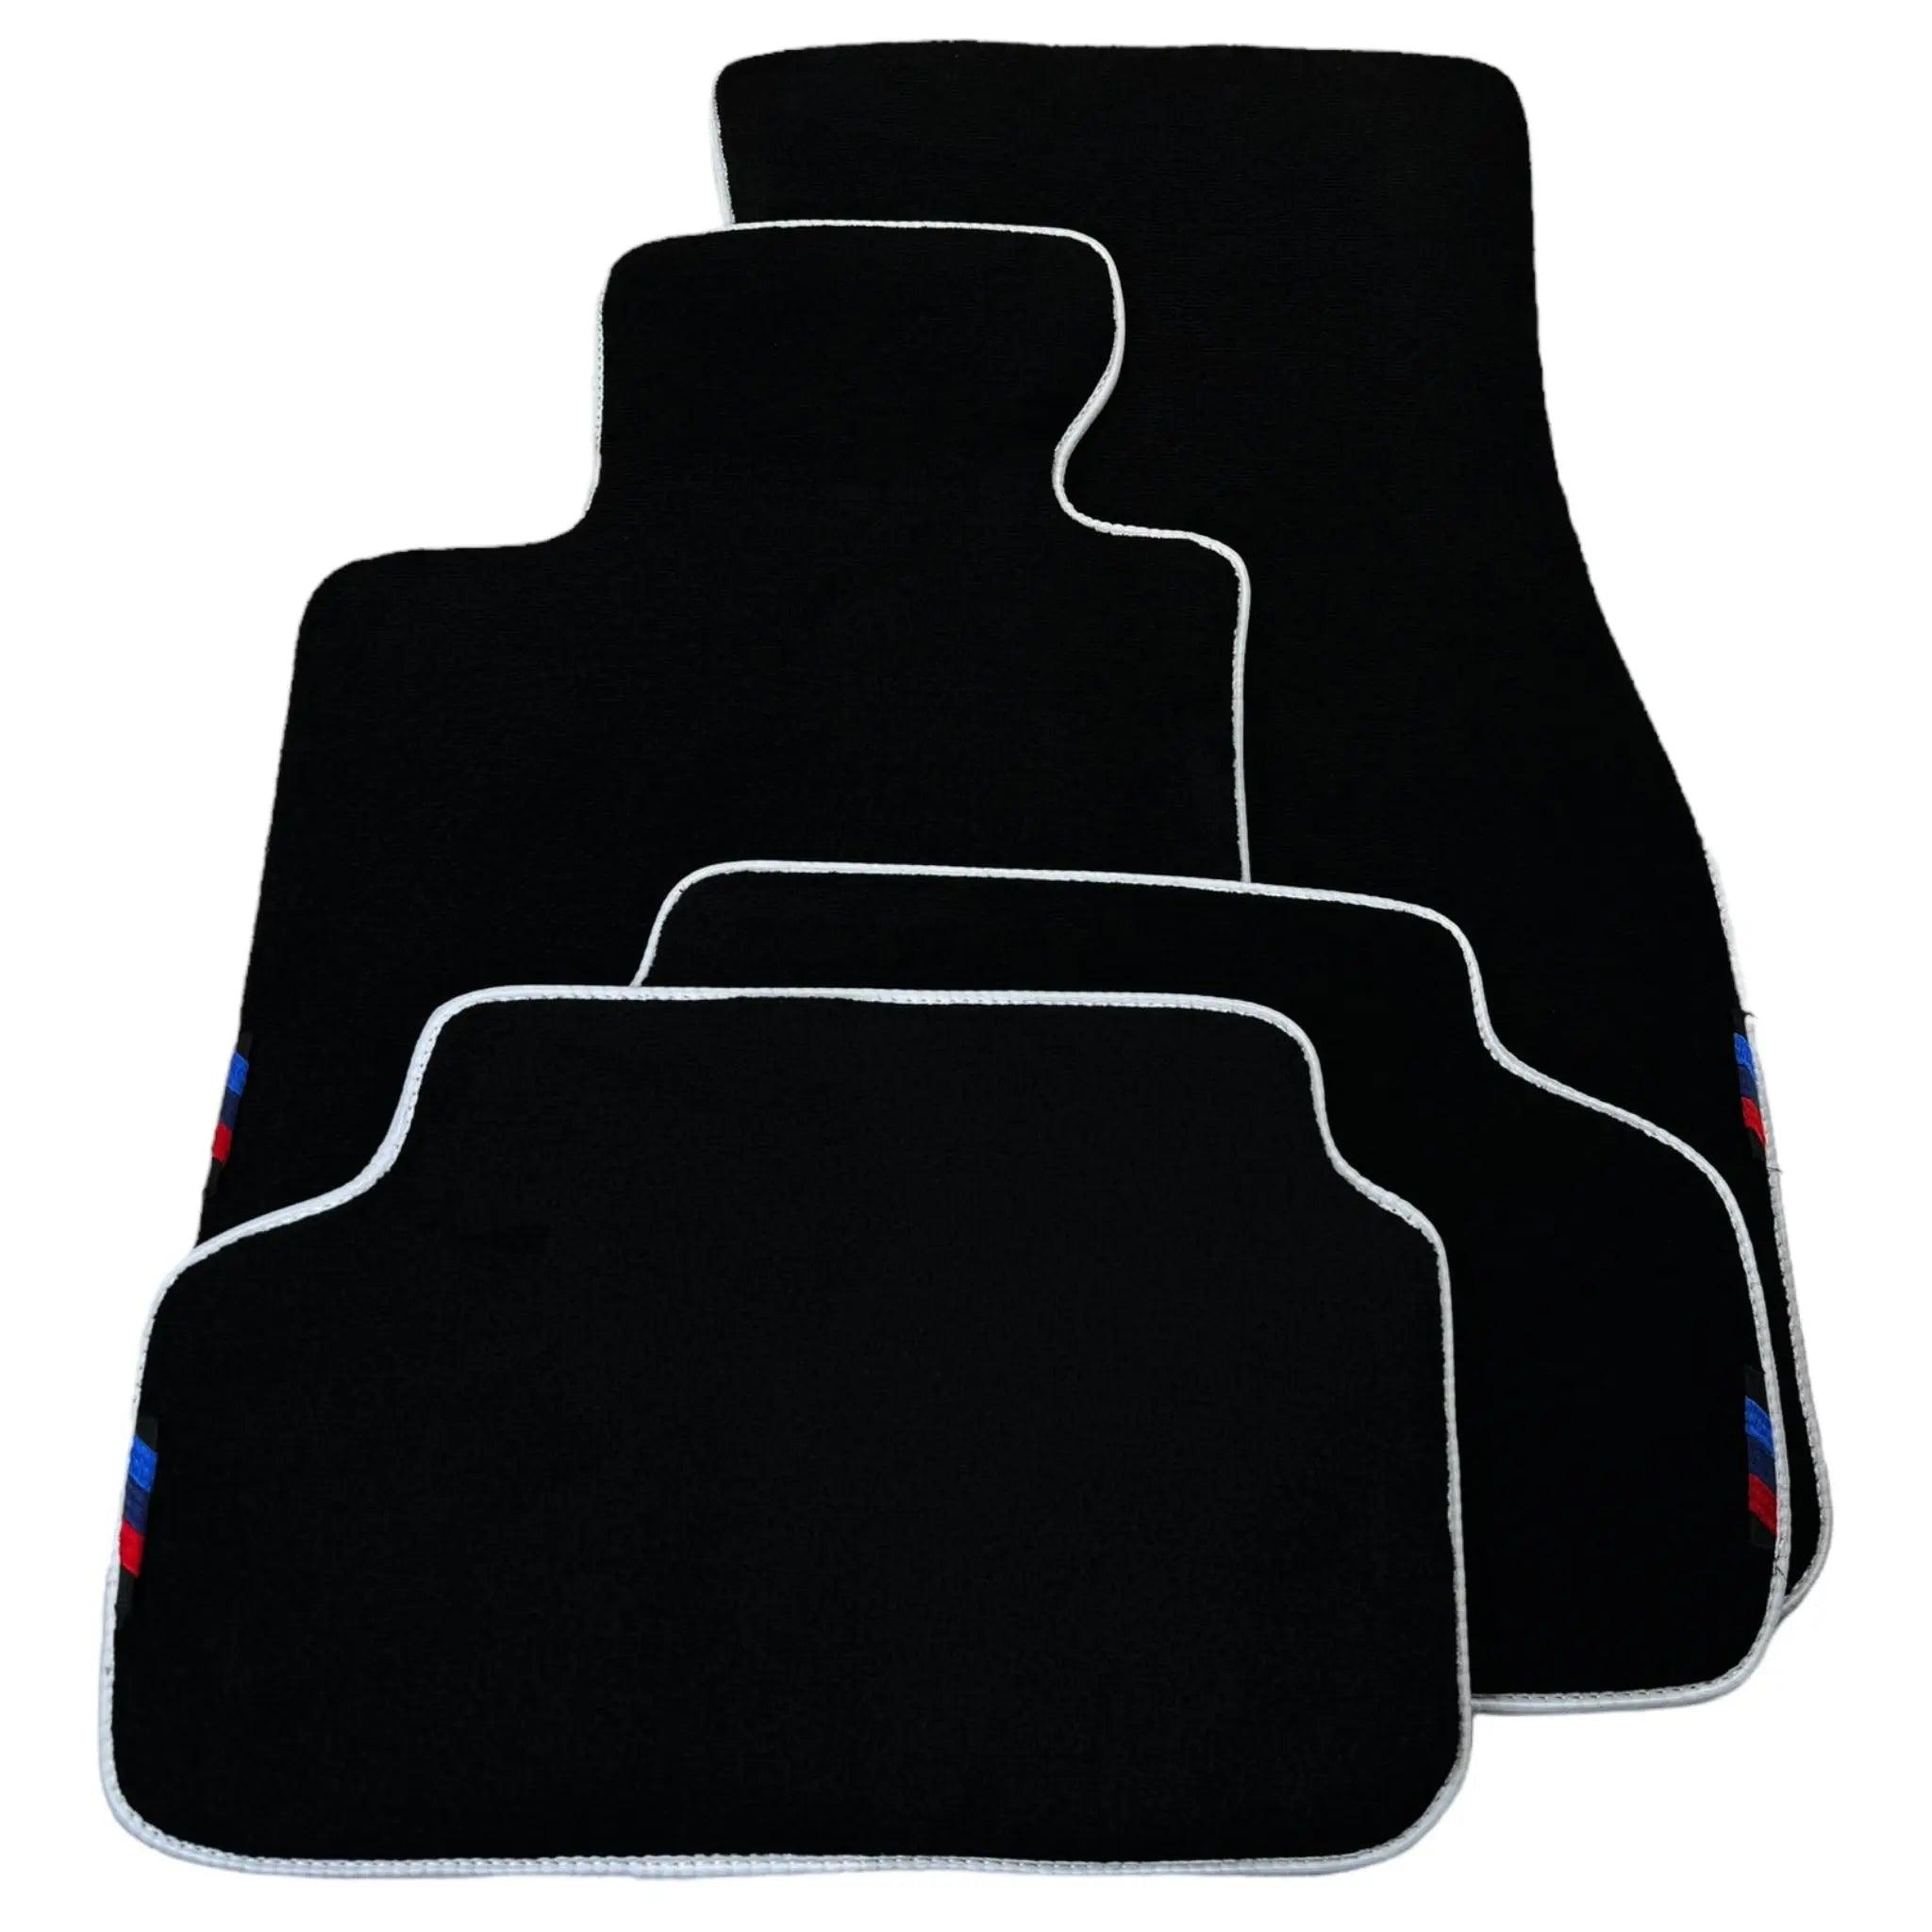 Black Floor Mats For BMW 3 Series E36 Convertible | White Trim